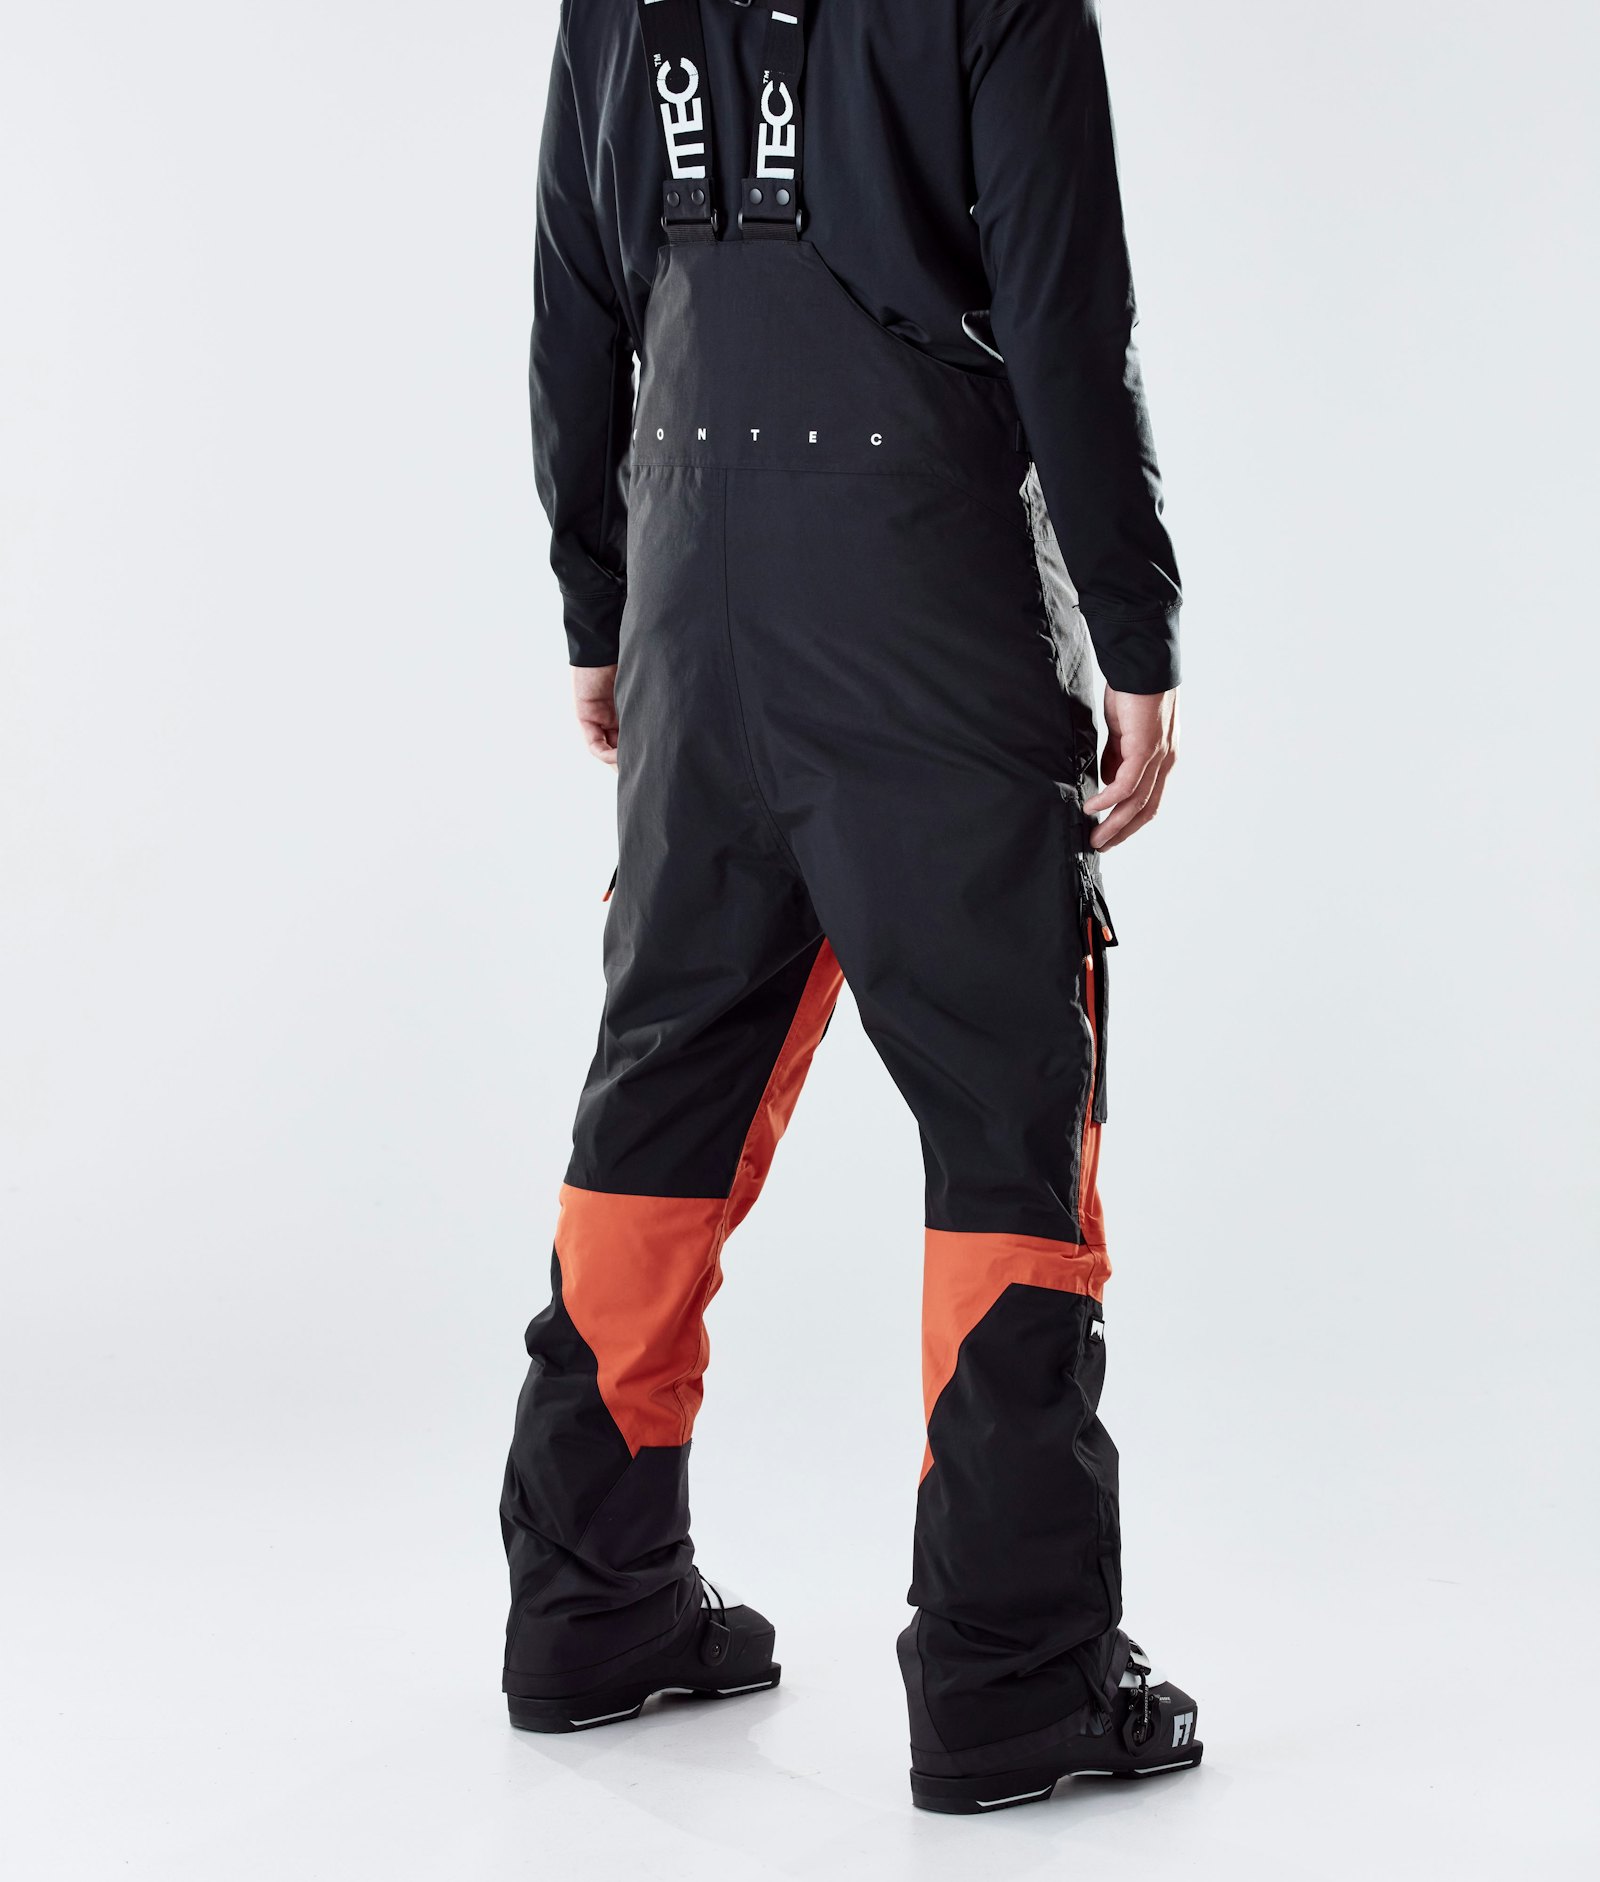 Fawk 2020 Ski Pants Men Black/Orange